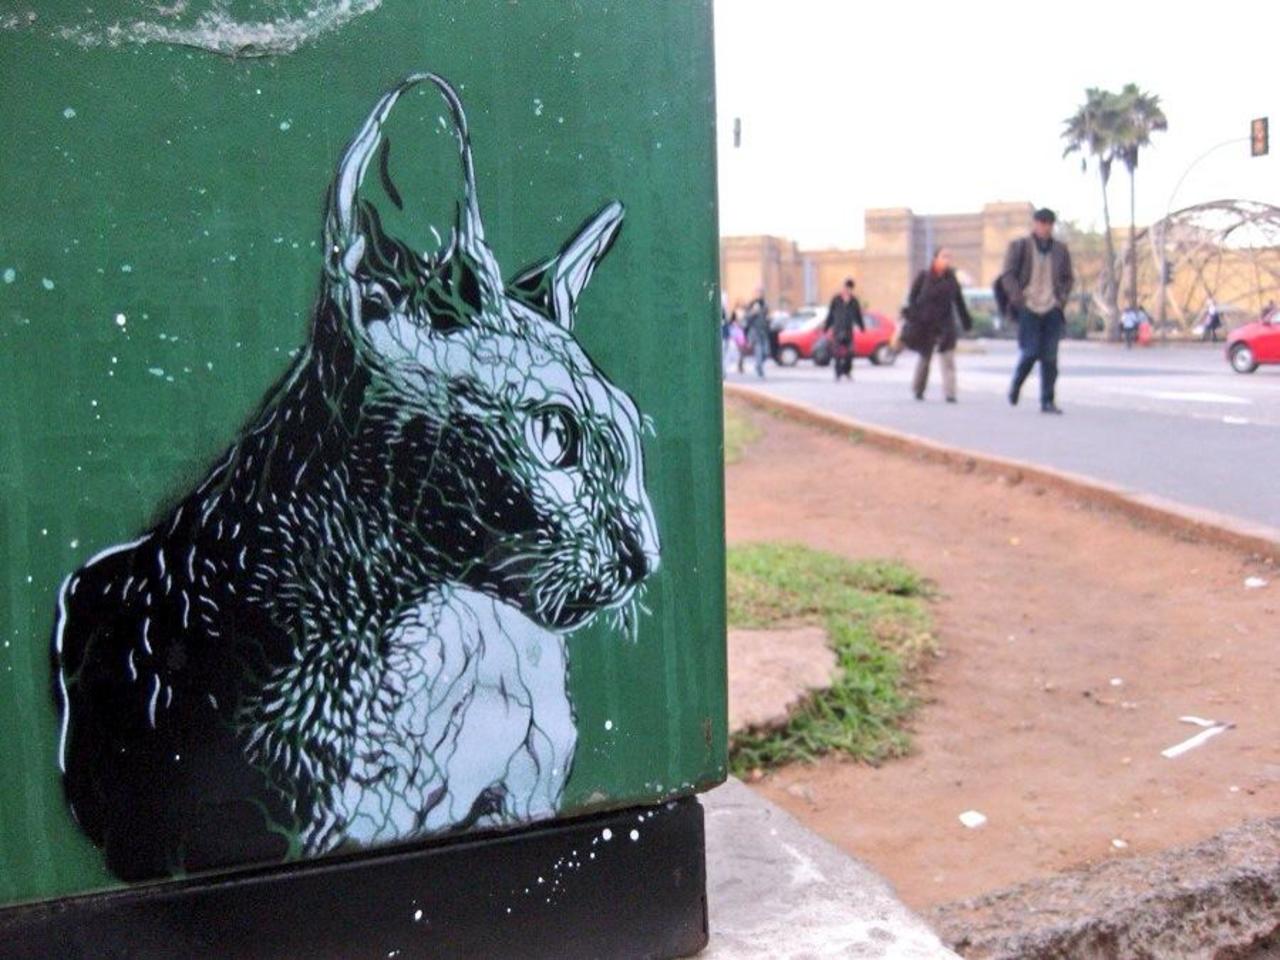 Cool ... Love C215 :) "@Pitchuskita: C215 Casablanca #streetart #art #urbanart #graffiti #cat http://t.co/yvF44vXZAC"